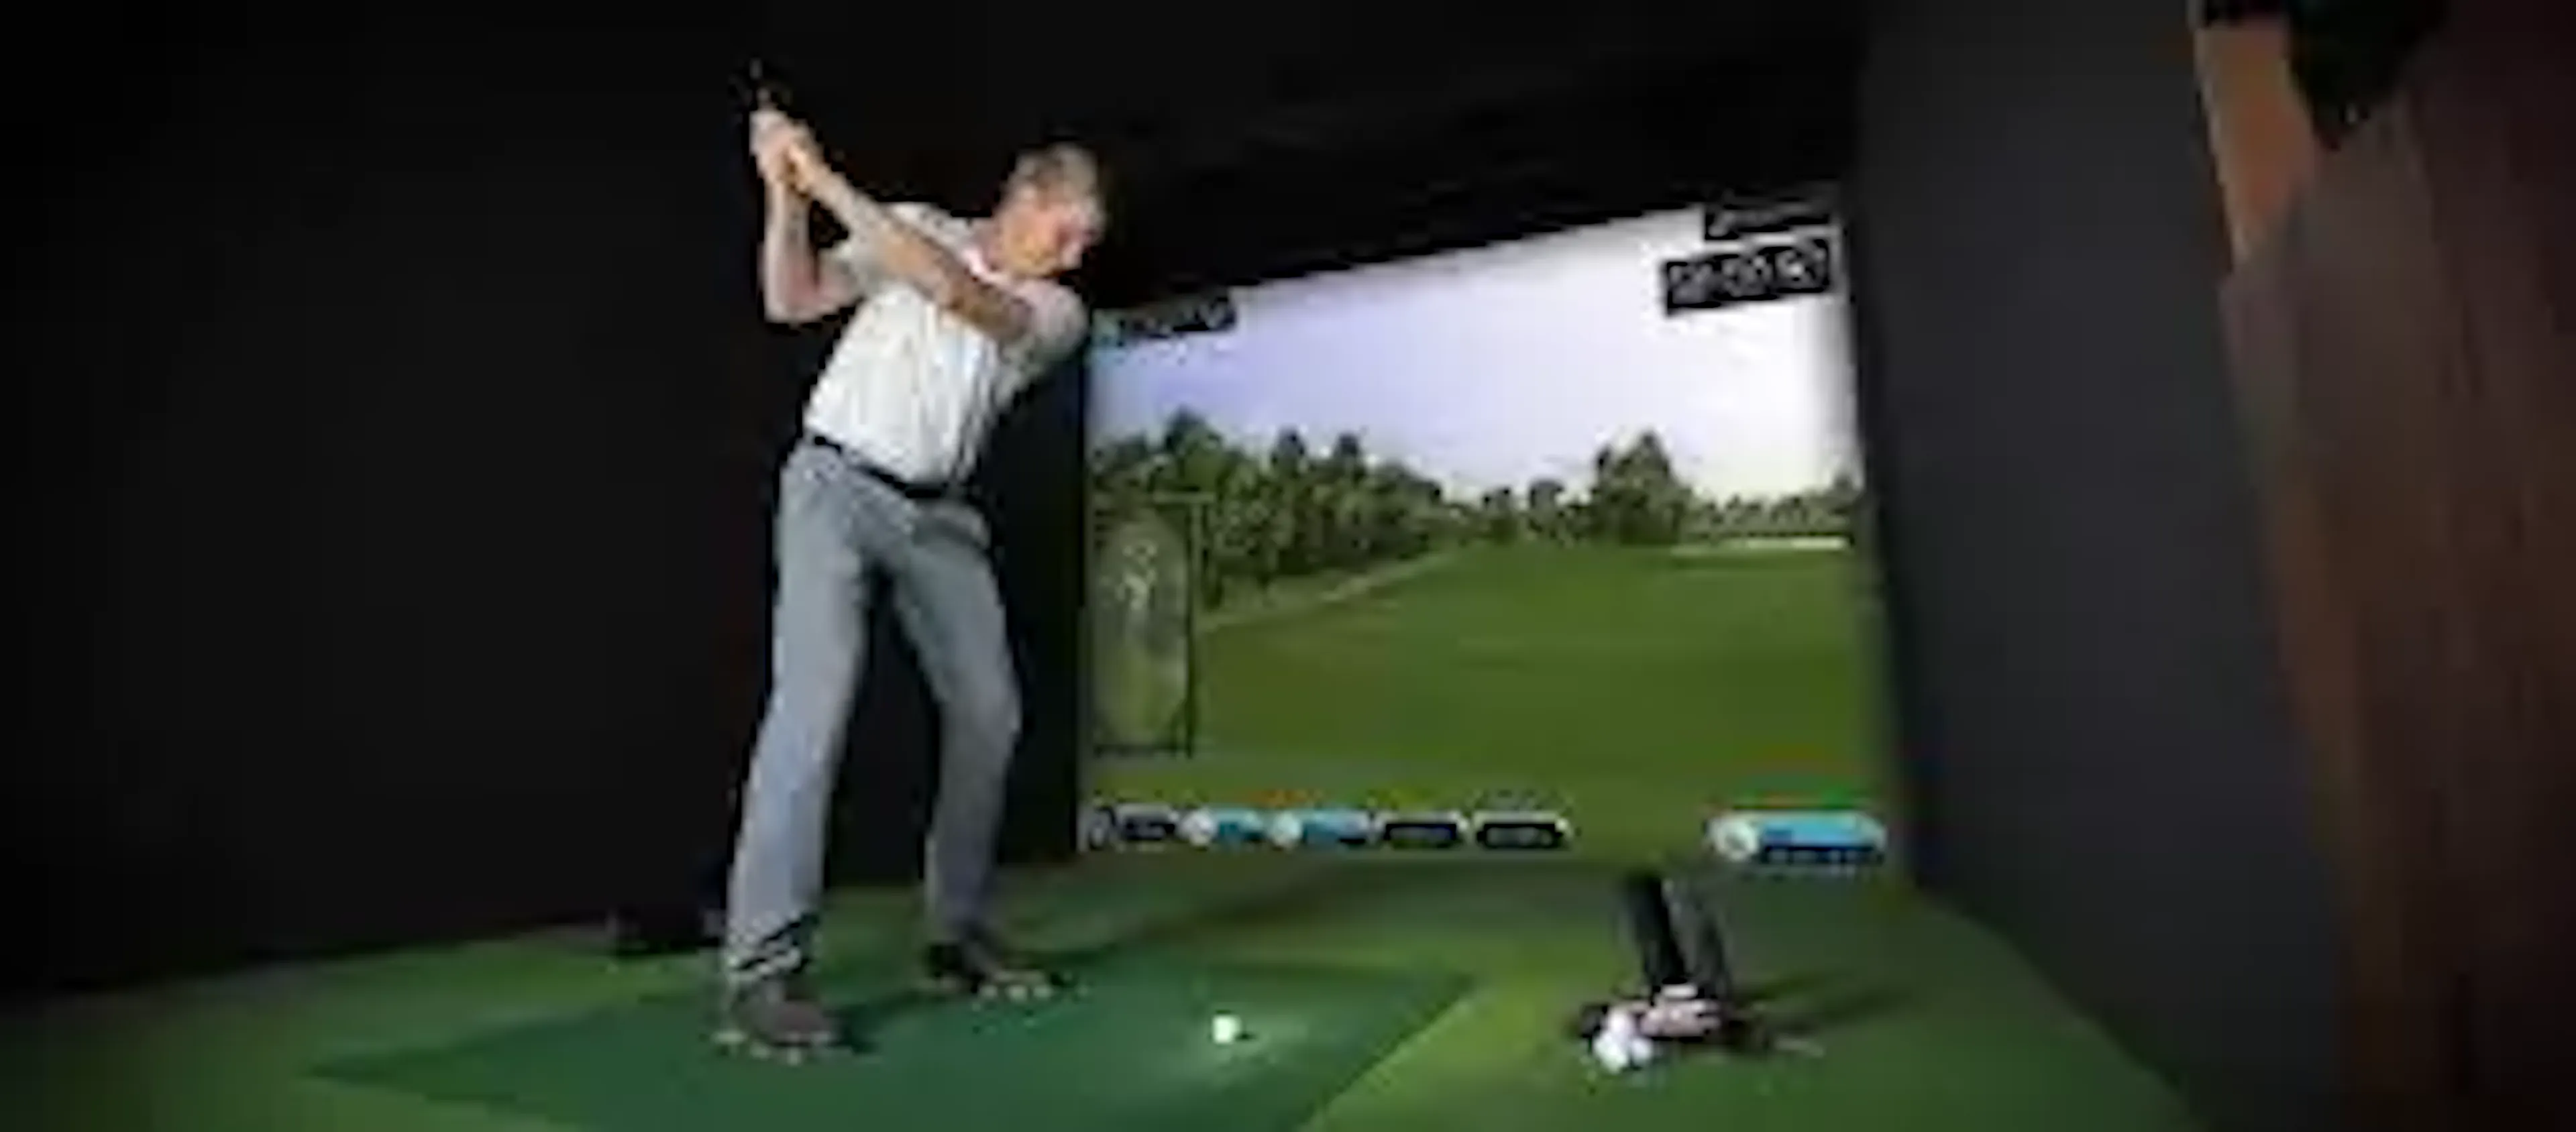 joe's golf - simulator - repairs - consignment sales